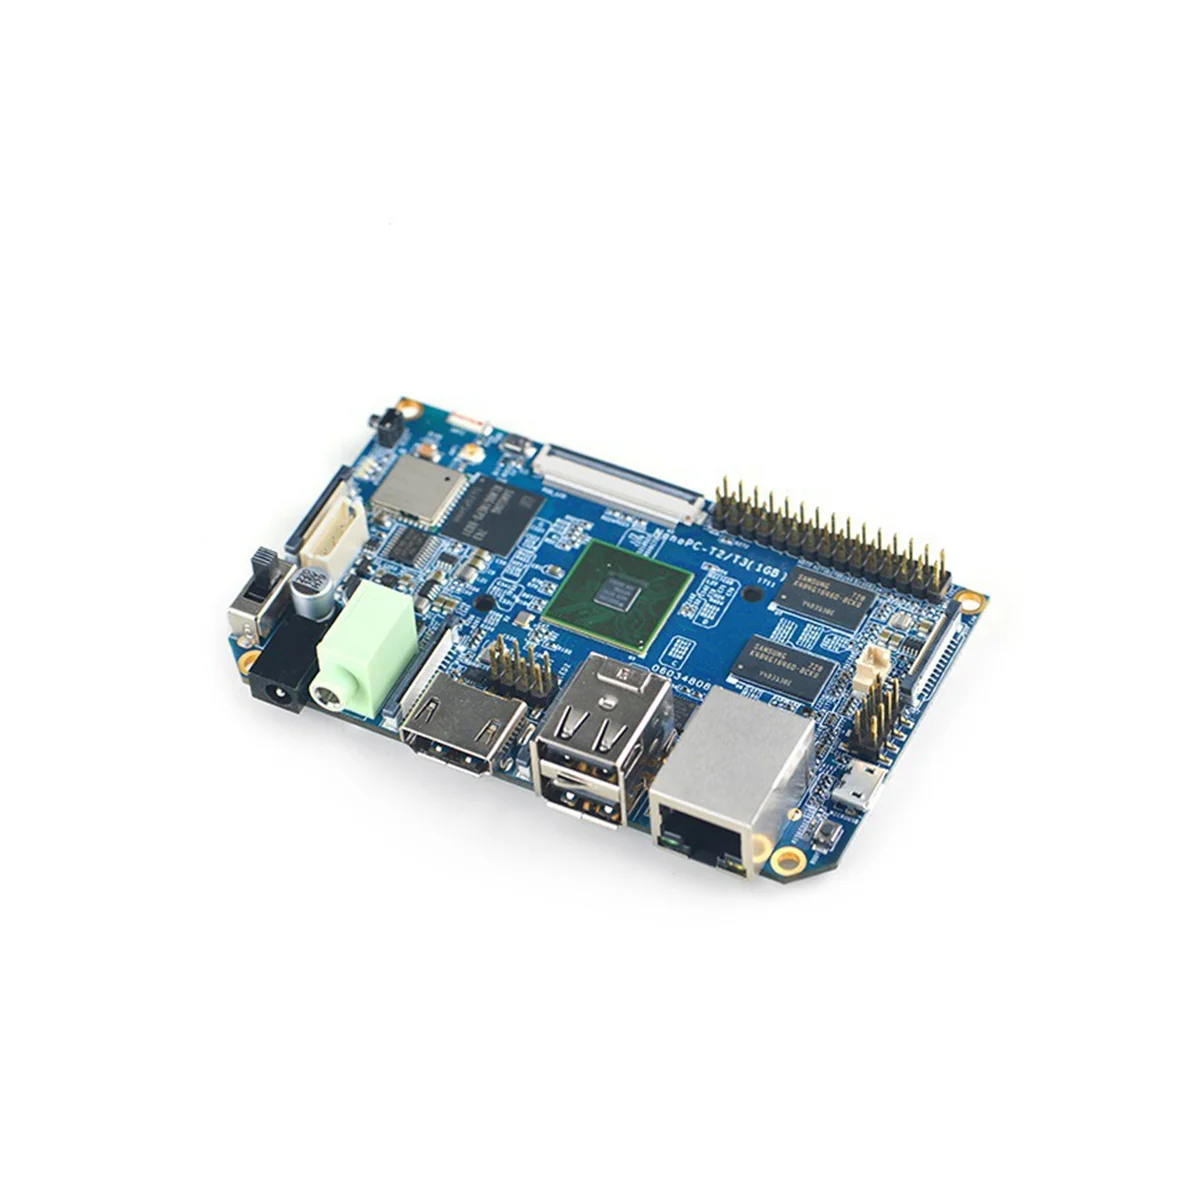 

For Nanopc-T2 Development Board S5P4418 Quad Core Cortex-A9 1GB DDR3 RAM Wifi Bluetooth A9 Card Support Ubuntu Android